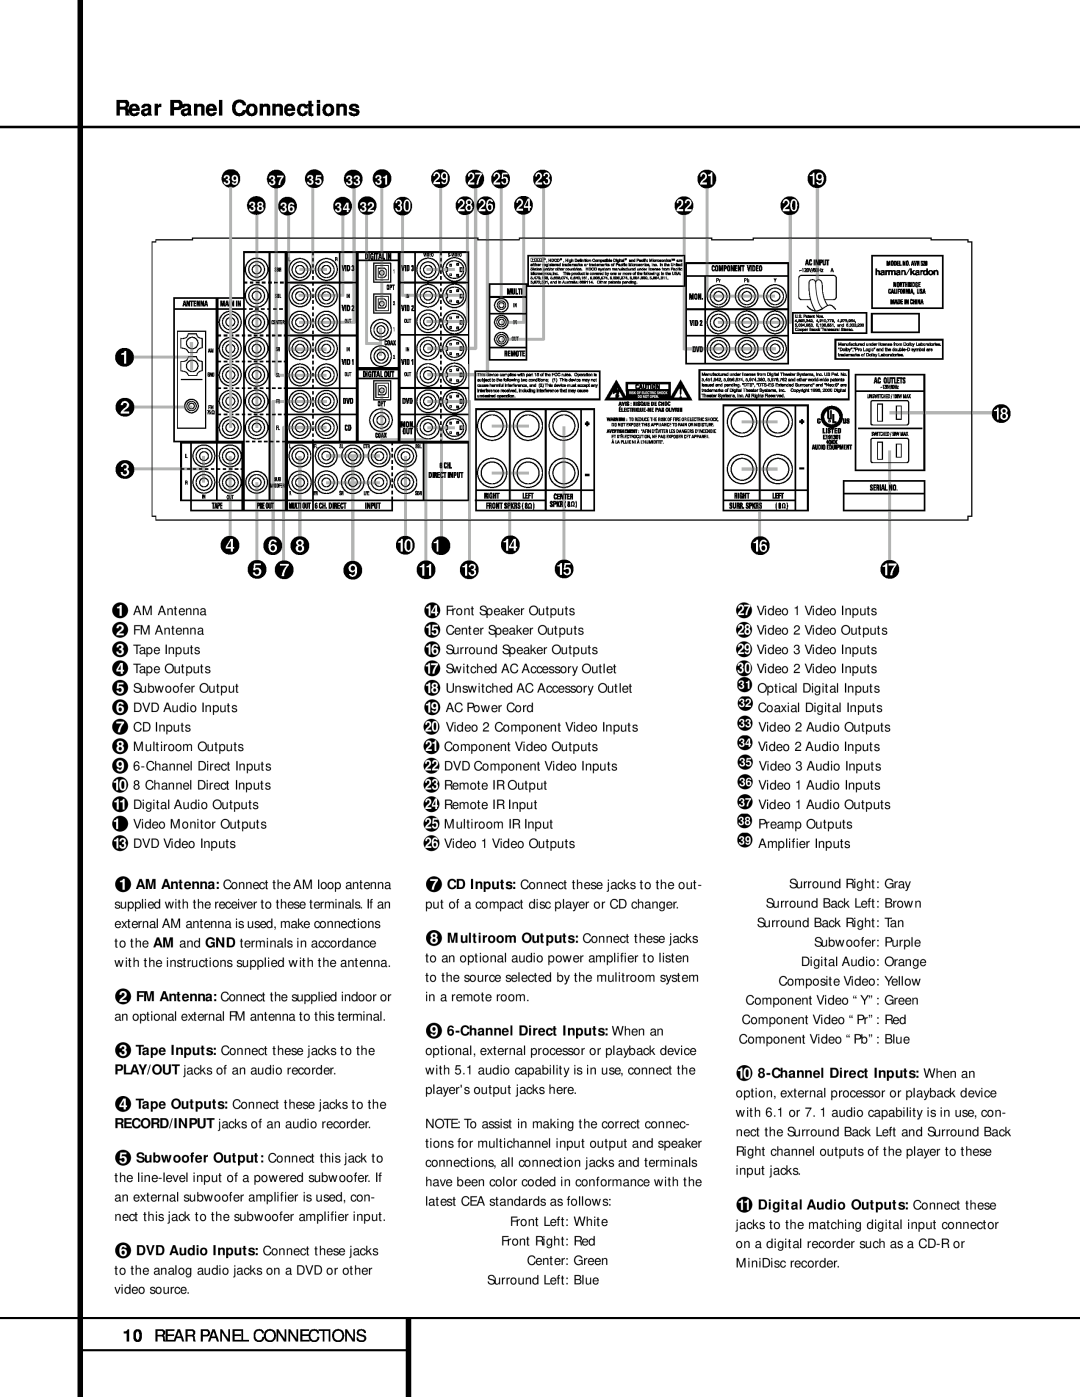 Harman-Kardon AVR 520 owner manual Rear Panel Connections, 10REAR PANEL CONNECTIONS 